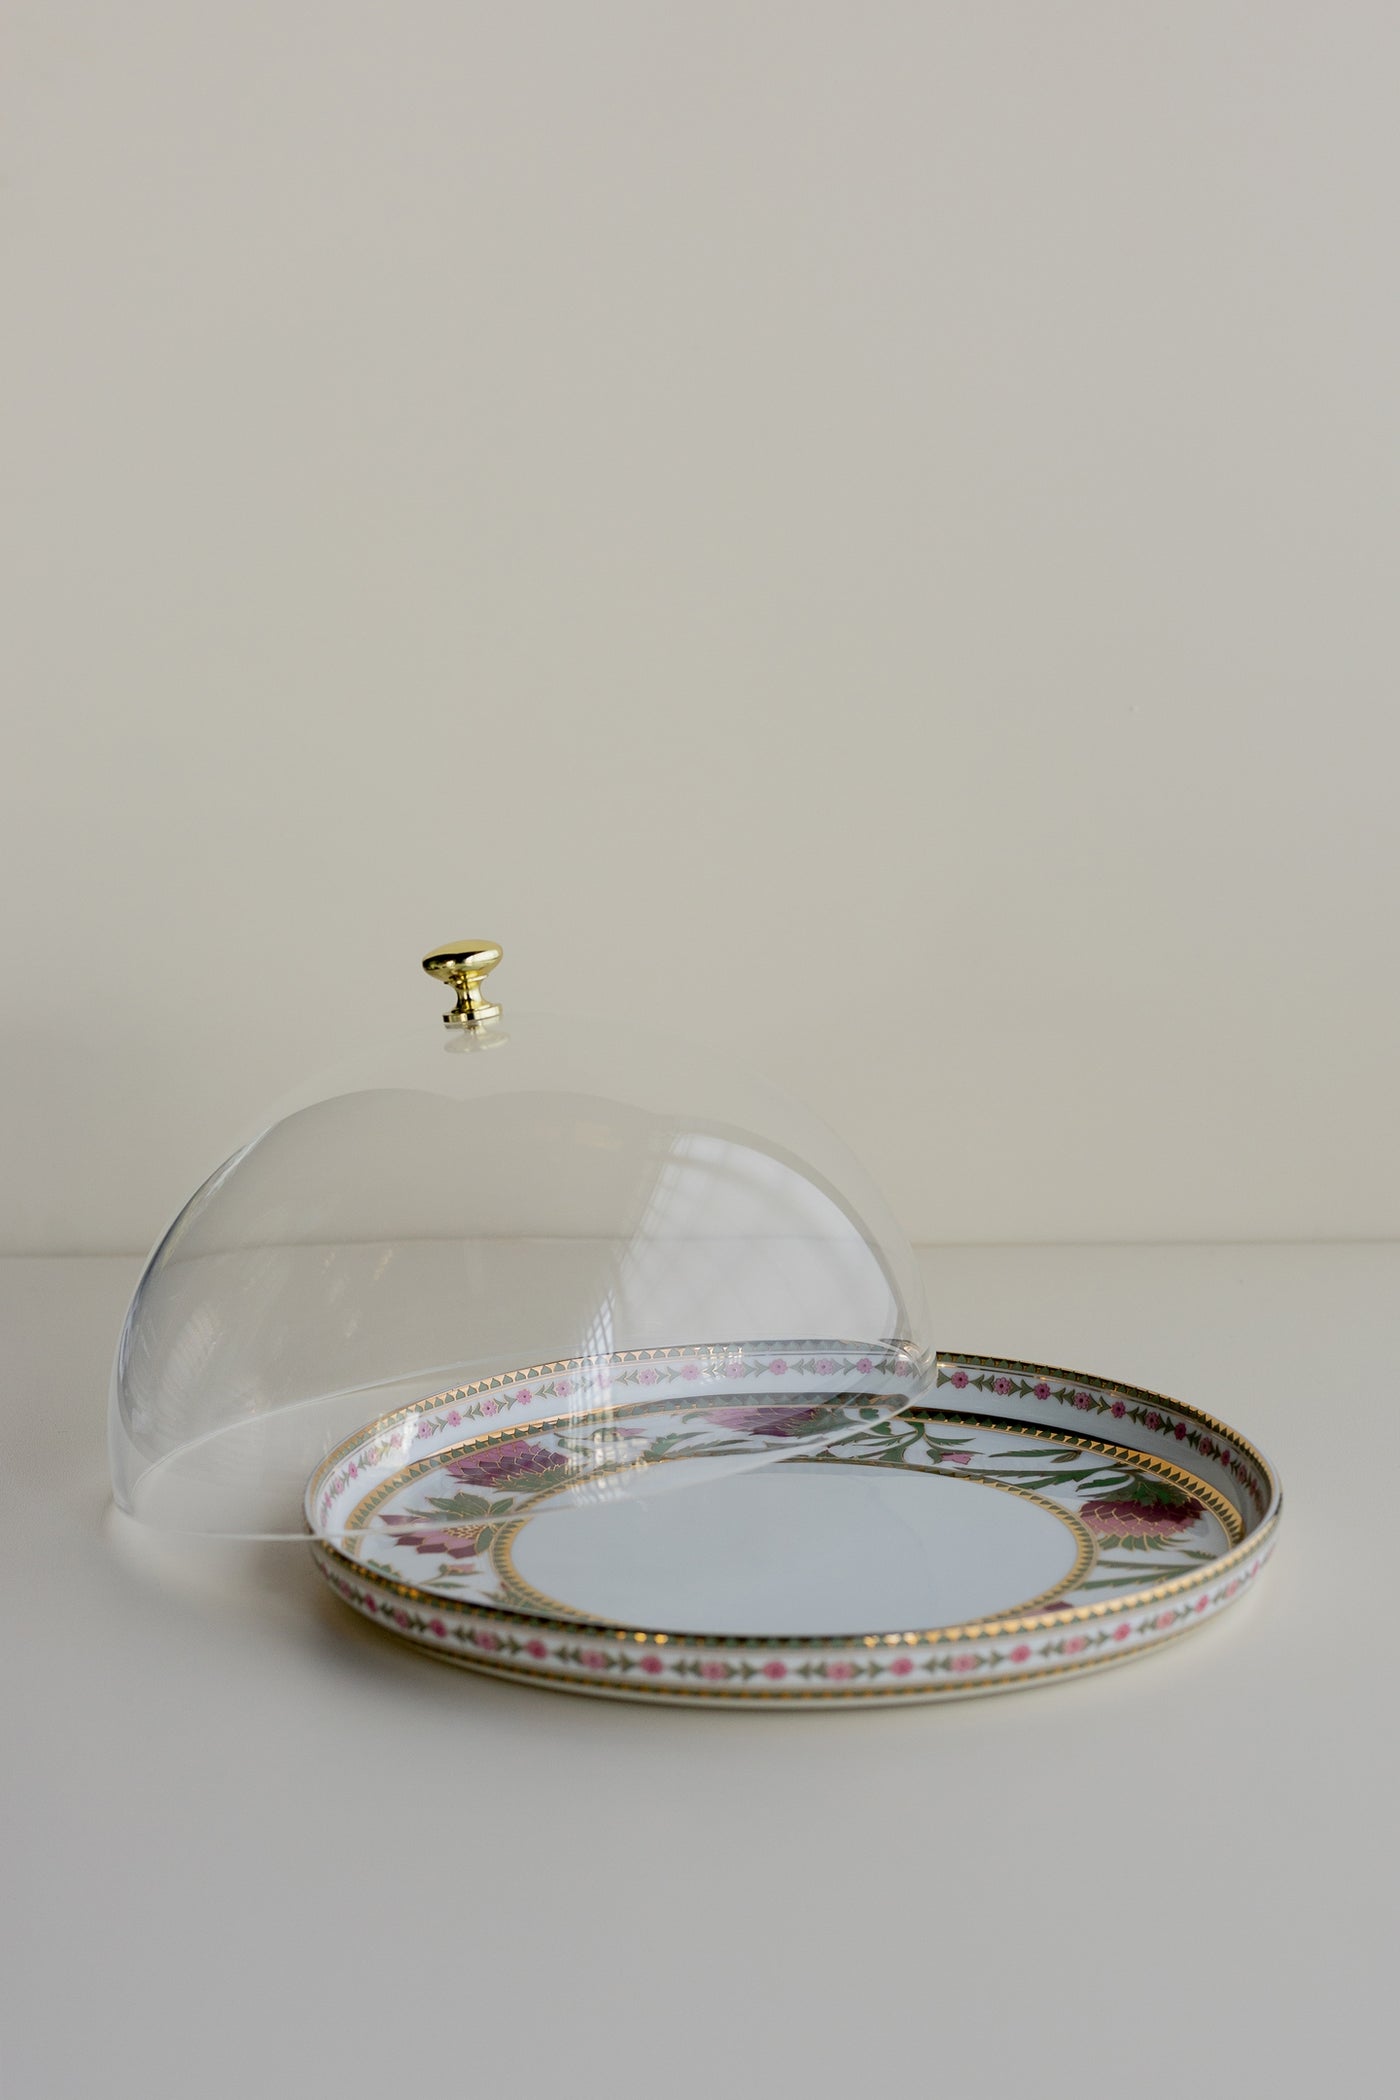 Medium Acrylic Dome (without platter)